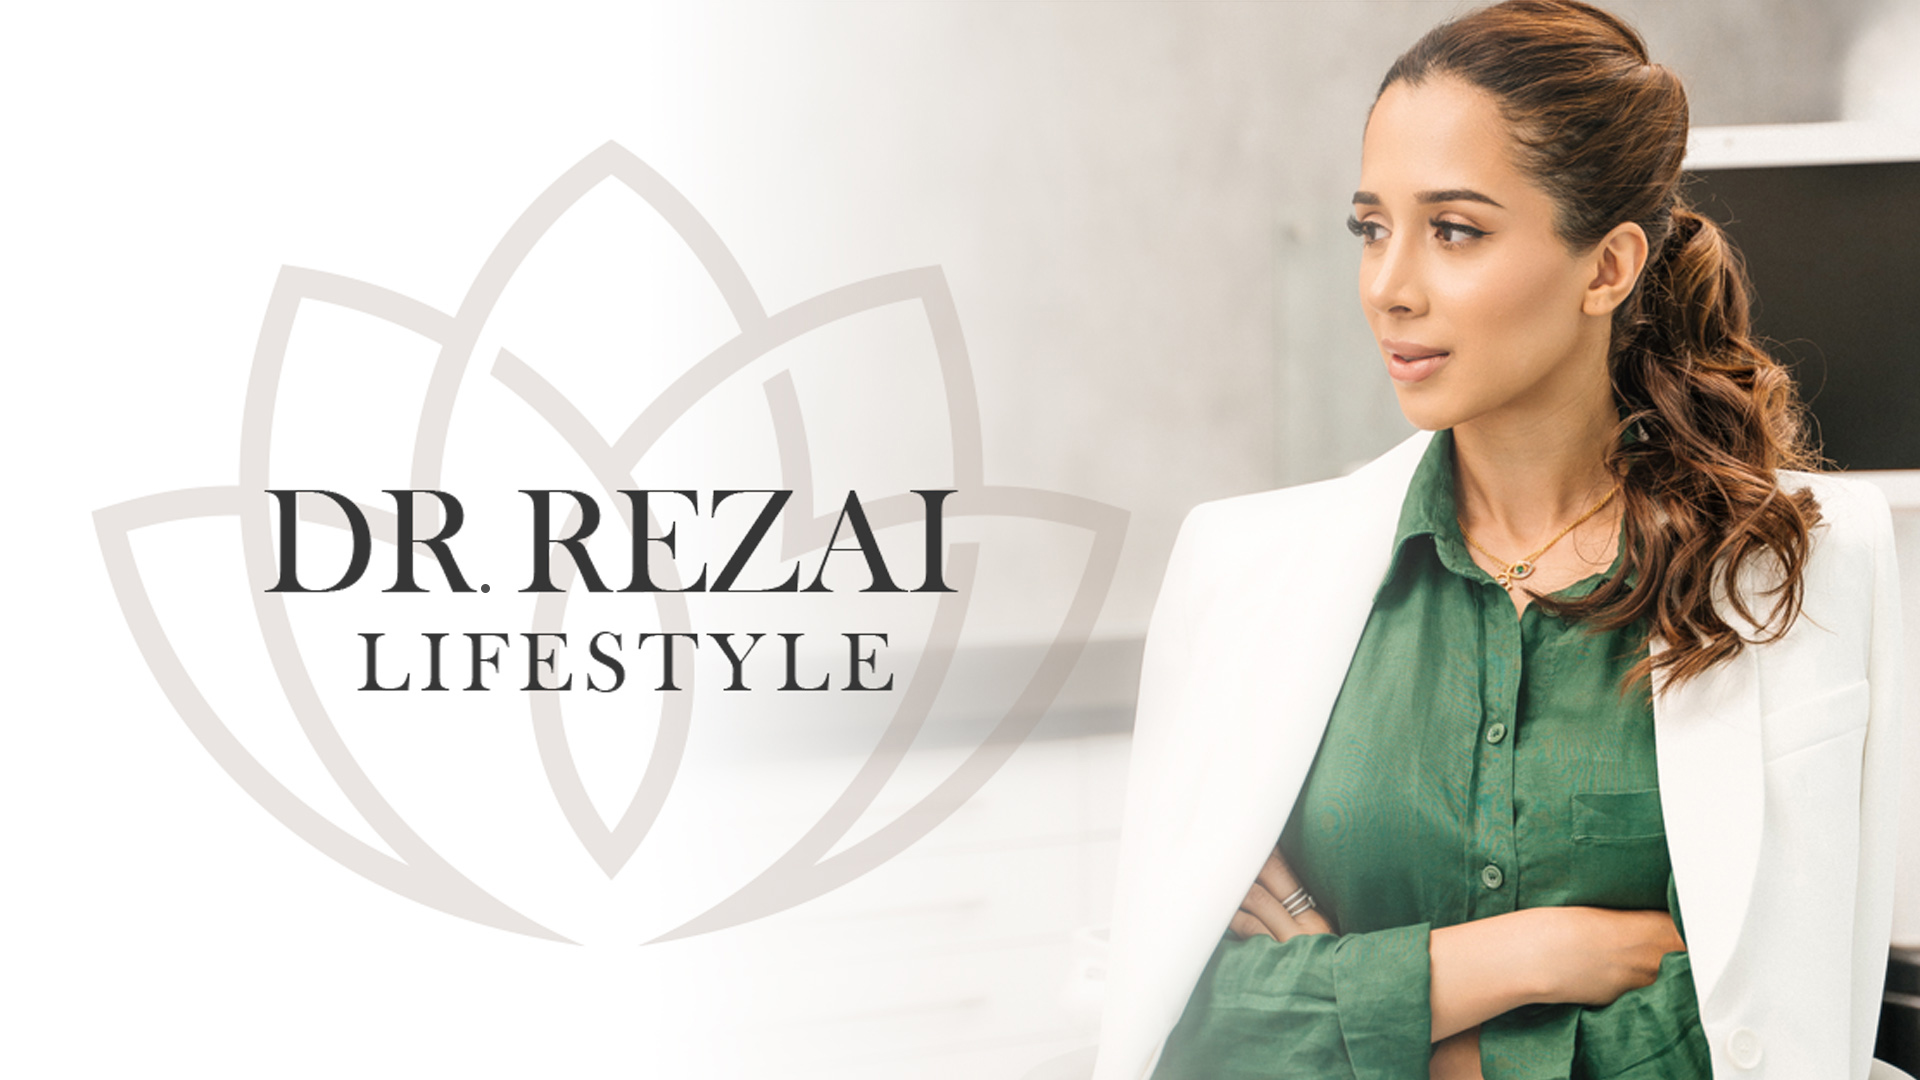 Dr. Rezai Lifestyle